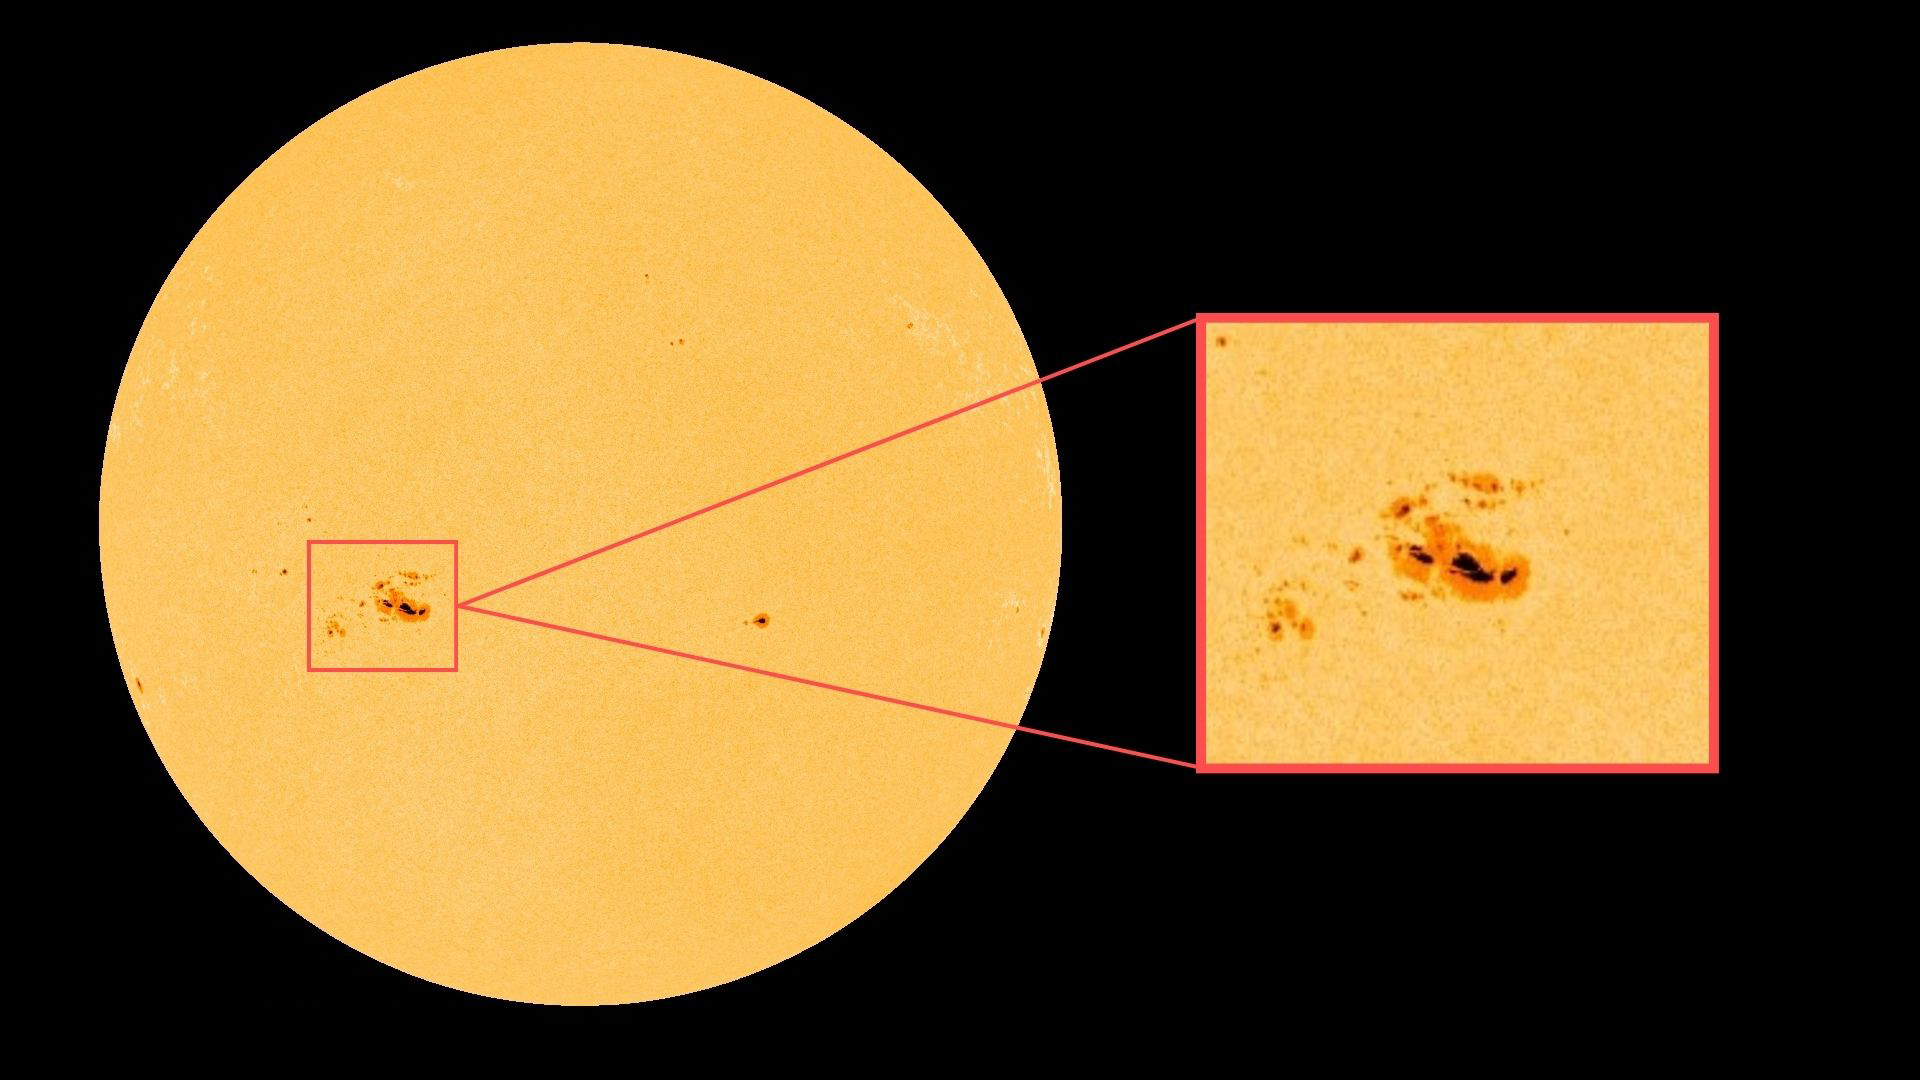 Sunspot AR3576 as viewed by NASA's Solar Dynamics Observatory.